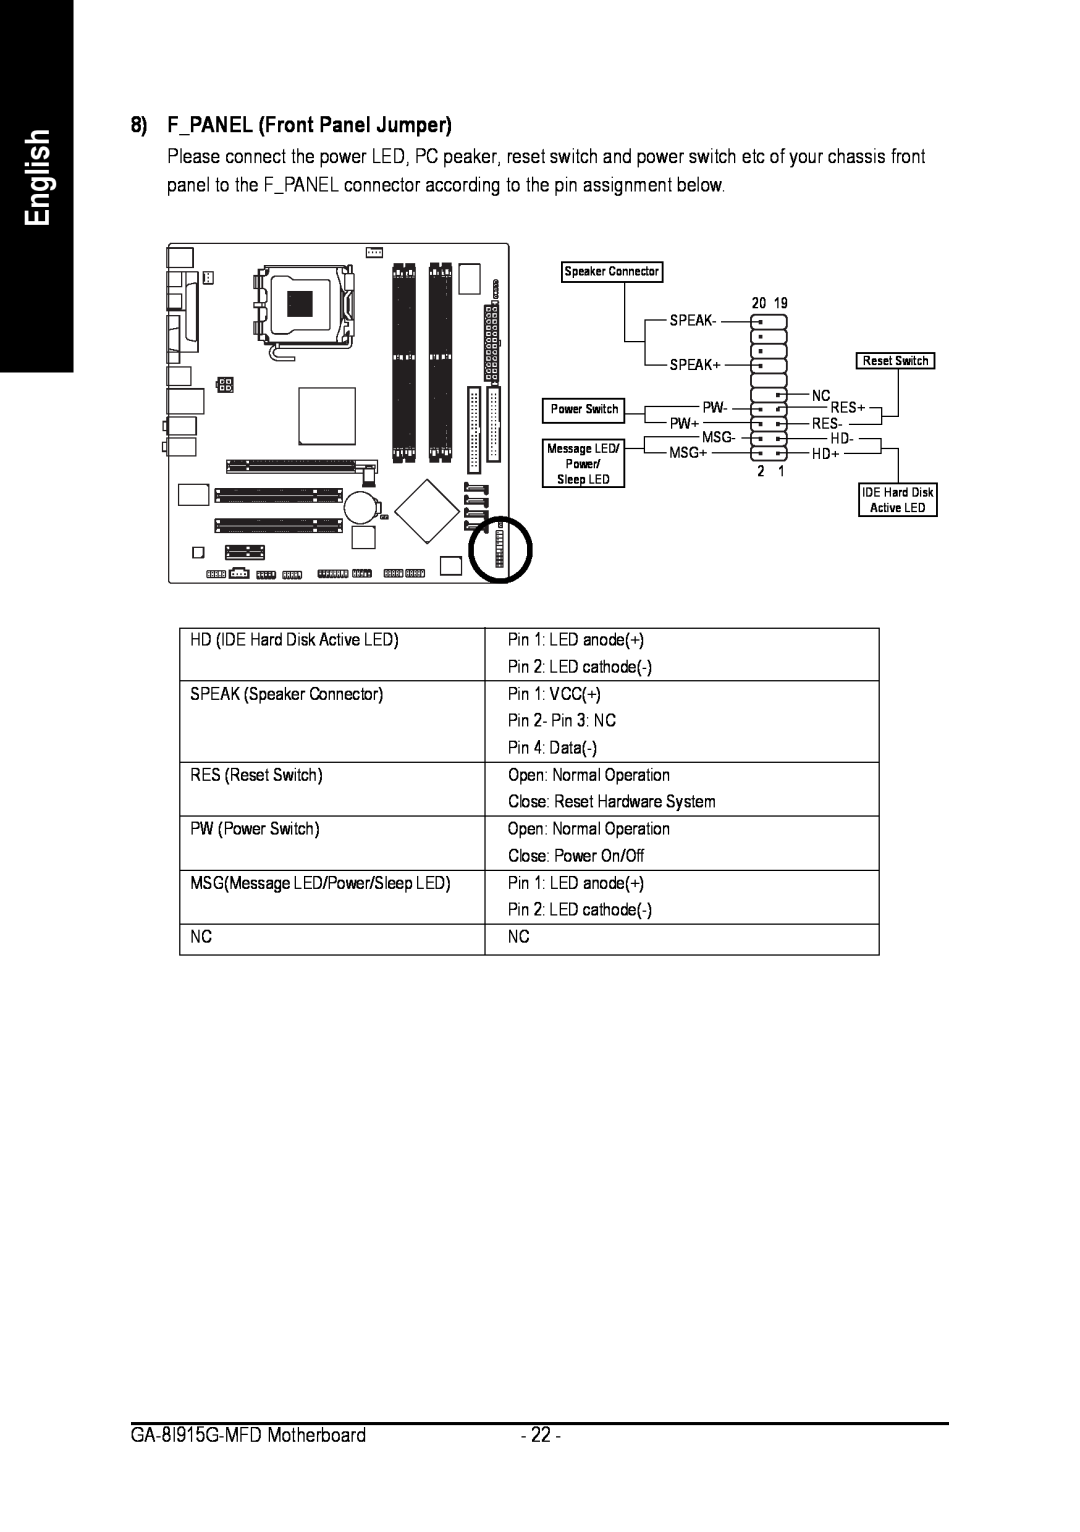 Intel user manual 8F_PANEL Front Panel Jumper, English, GA-8I915G-MFDMotherboard 